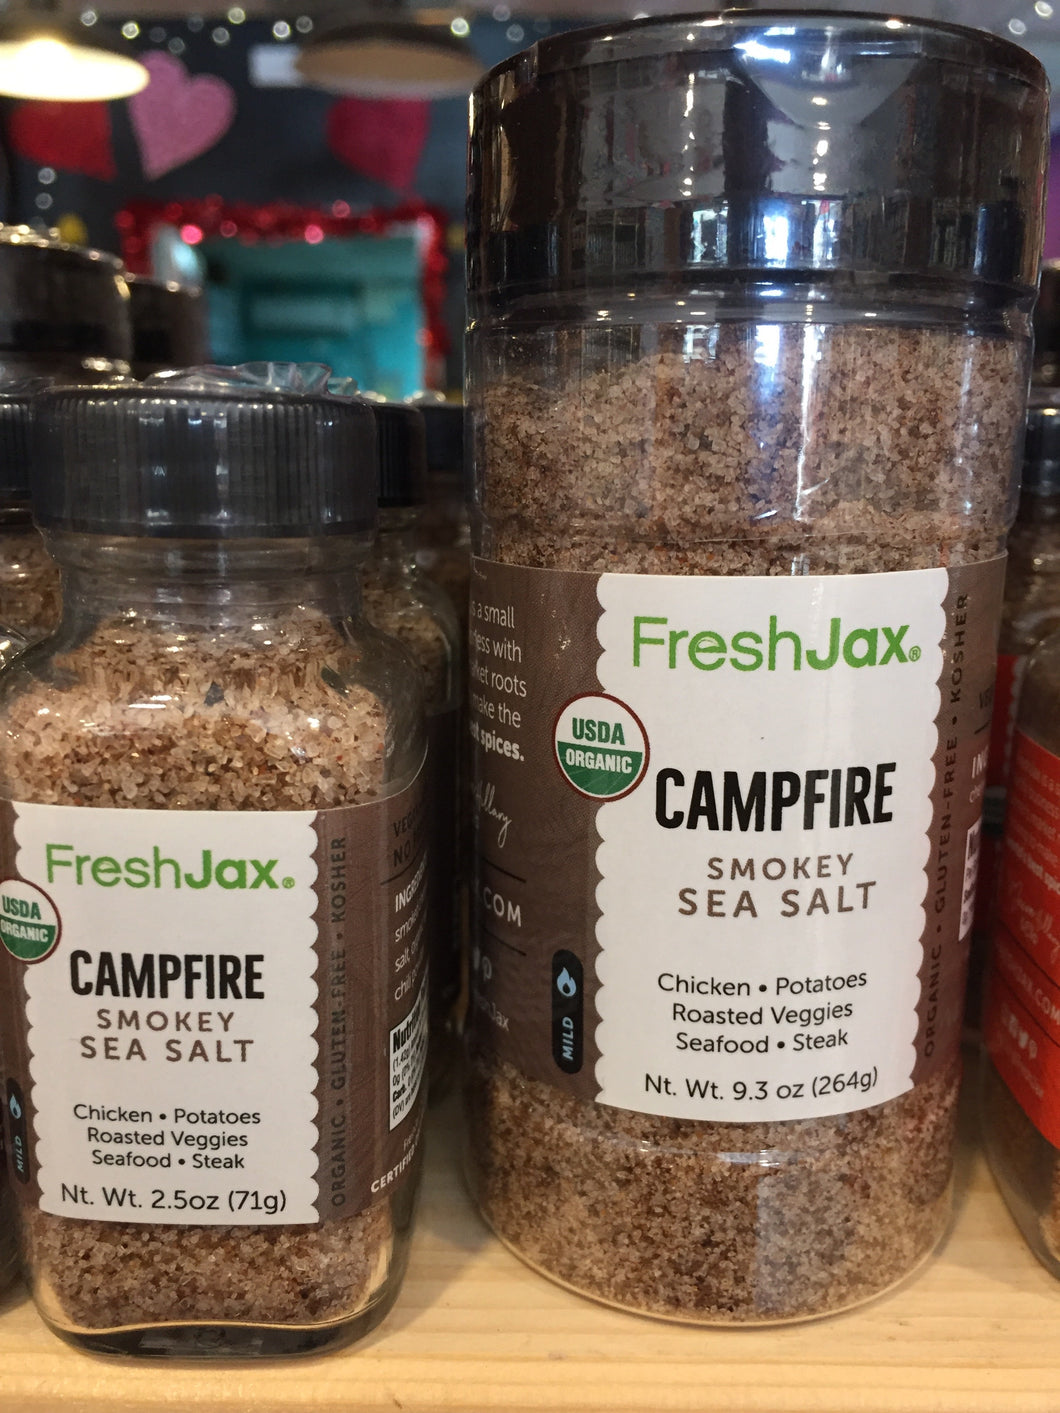 Campfire Sea Salt: FreshJax at Hoby’s